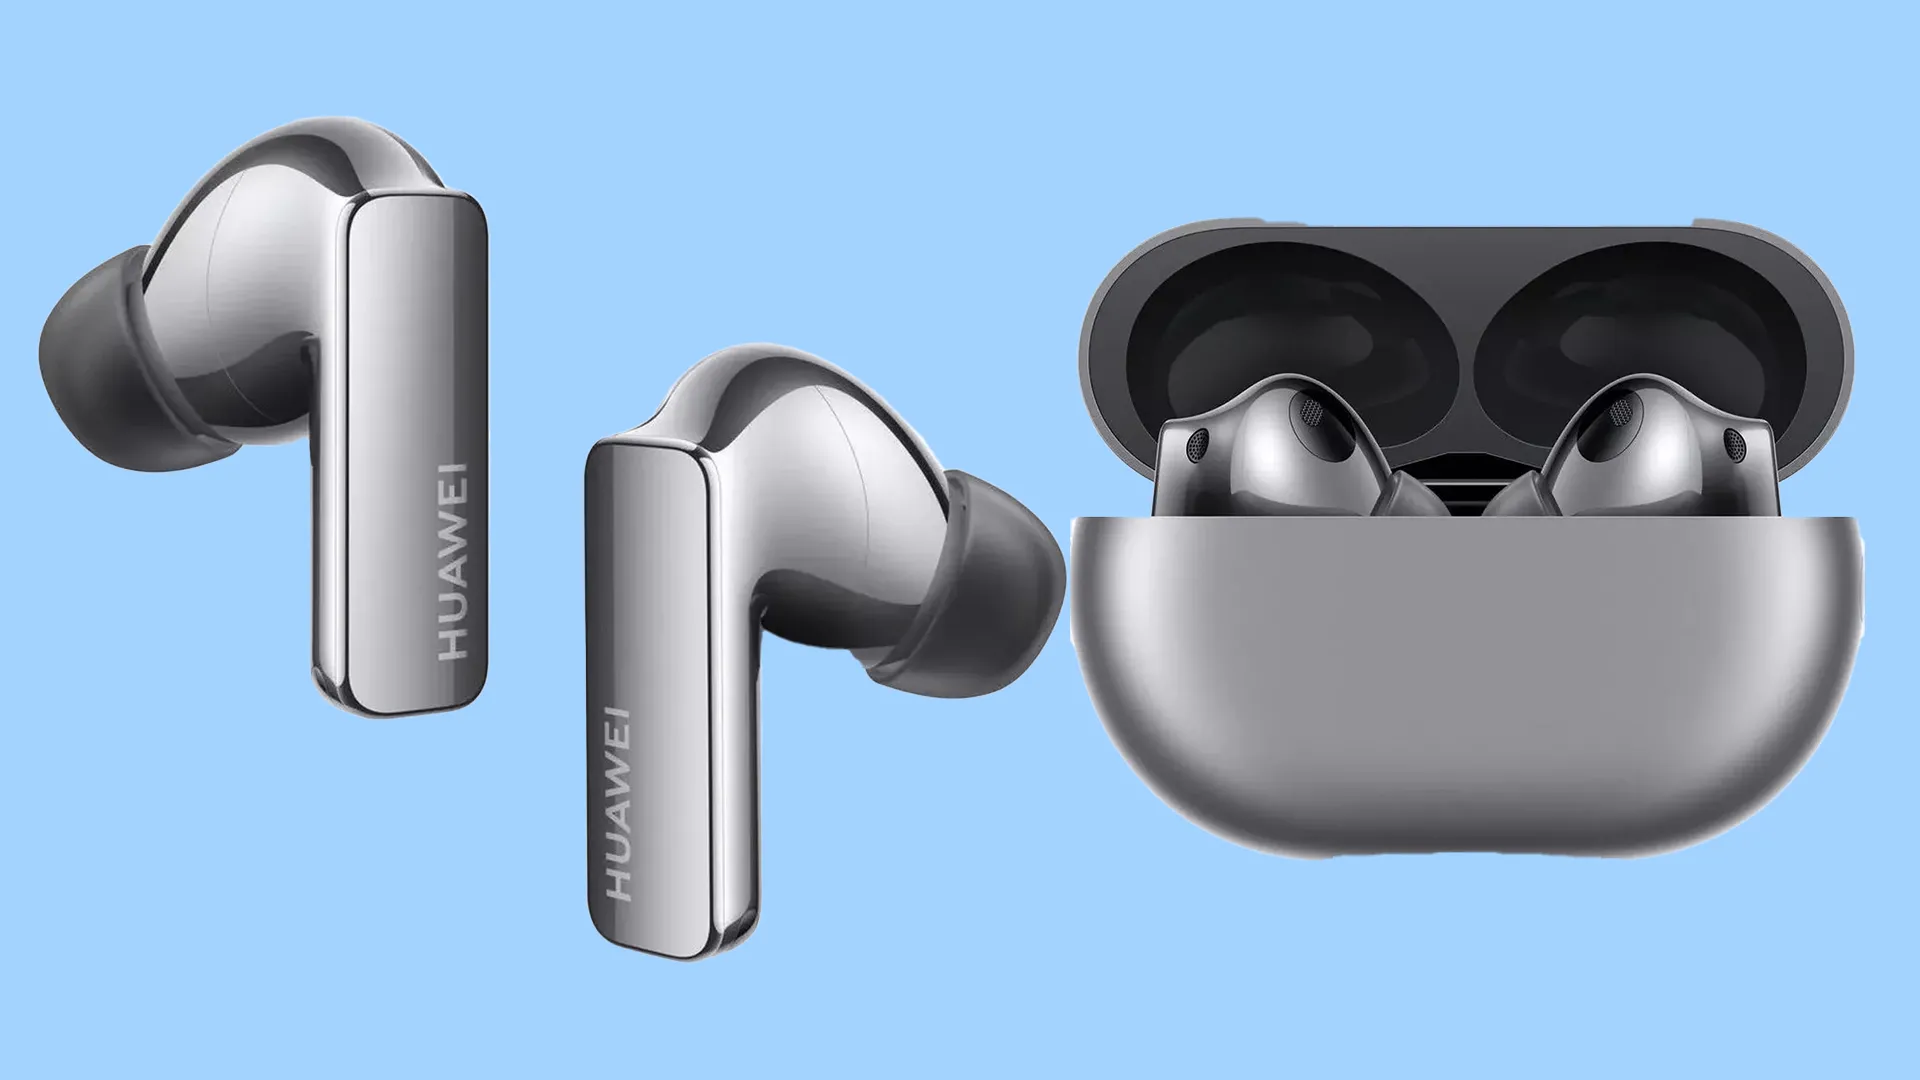 5 • Mejores Auriculares Inalámbricos Huawei ® 2024